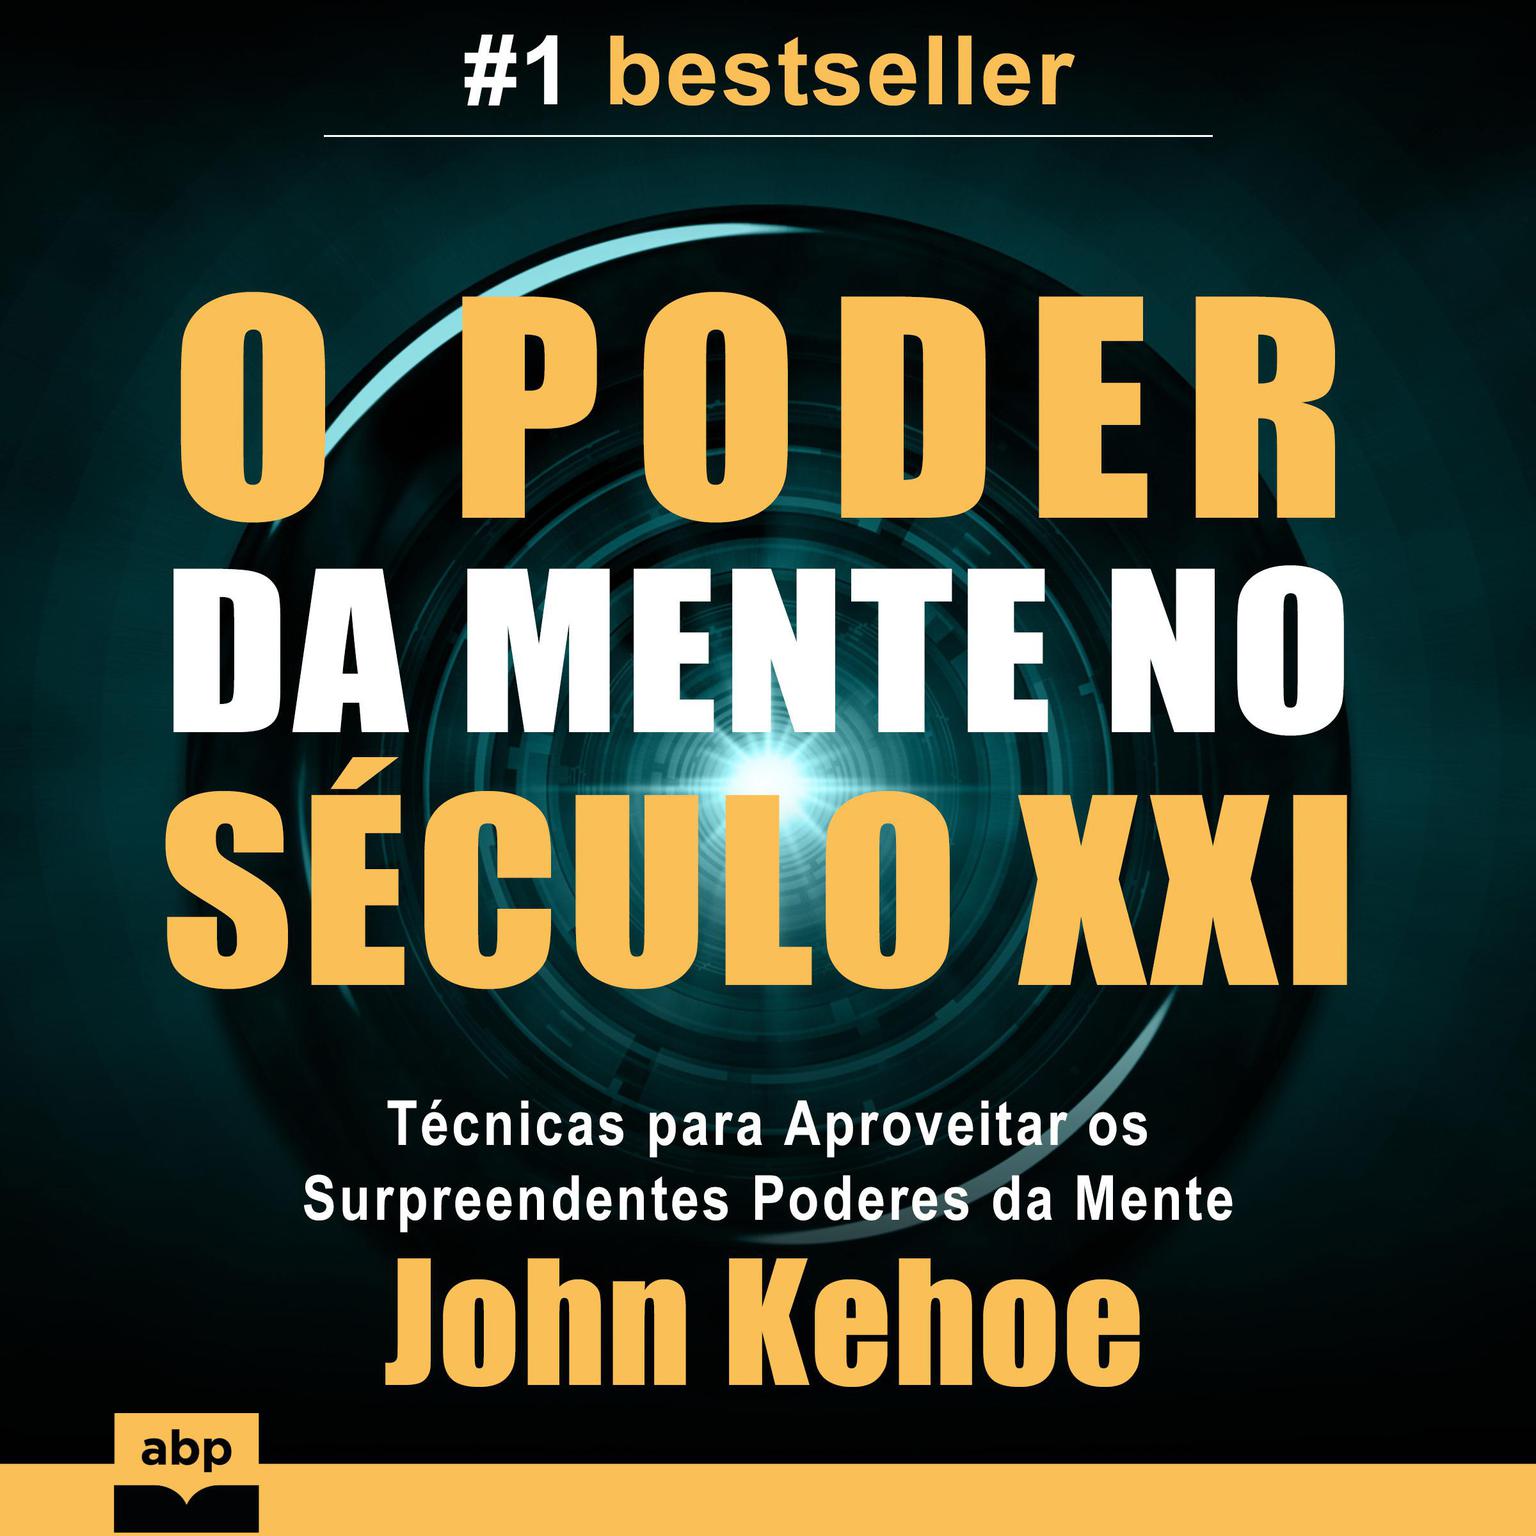 O Poder da Mente no Século XXI Audiobook, by John Kehoe